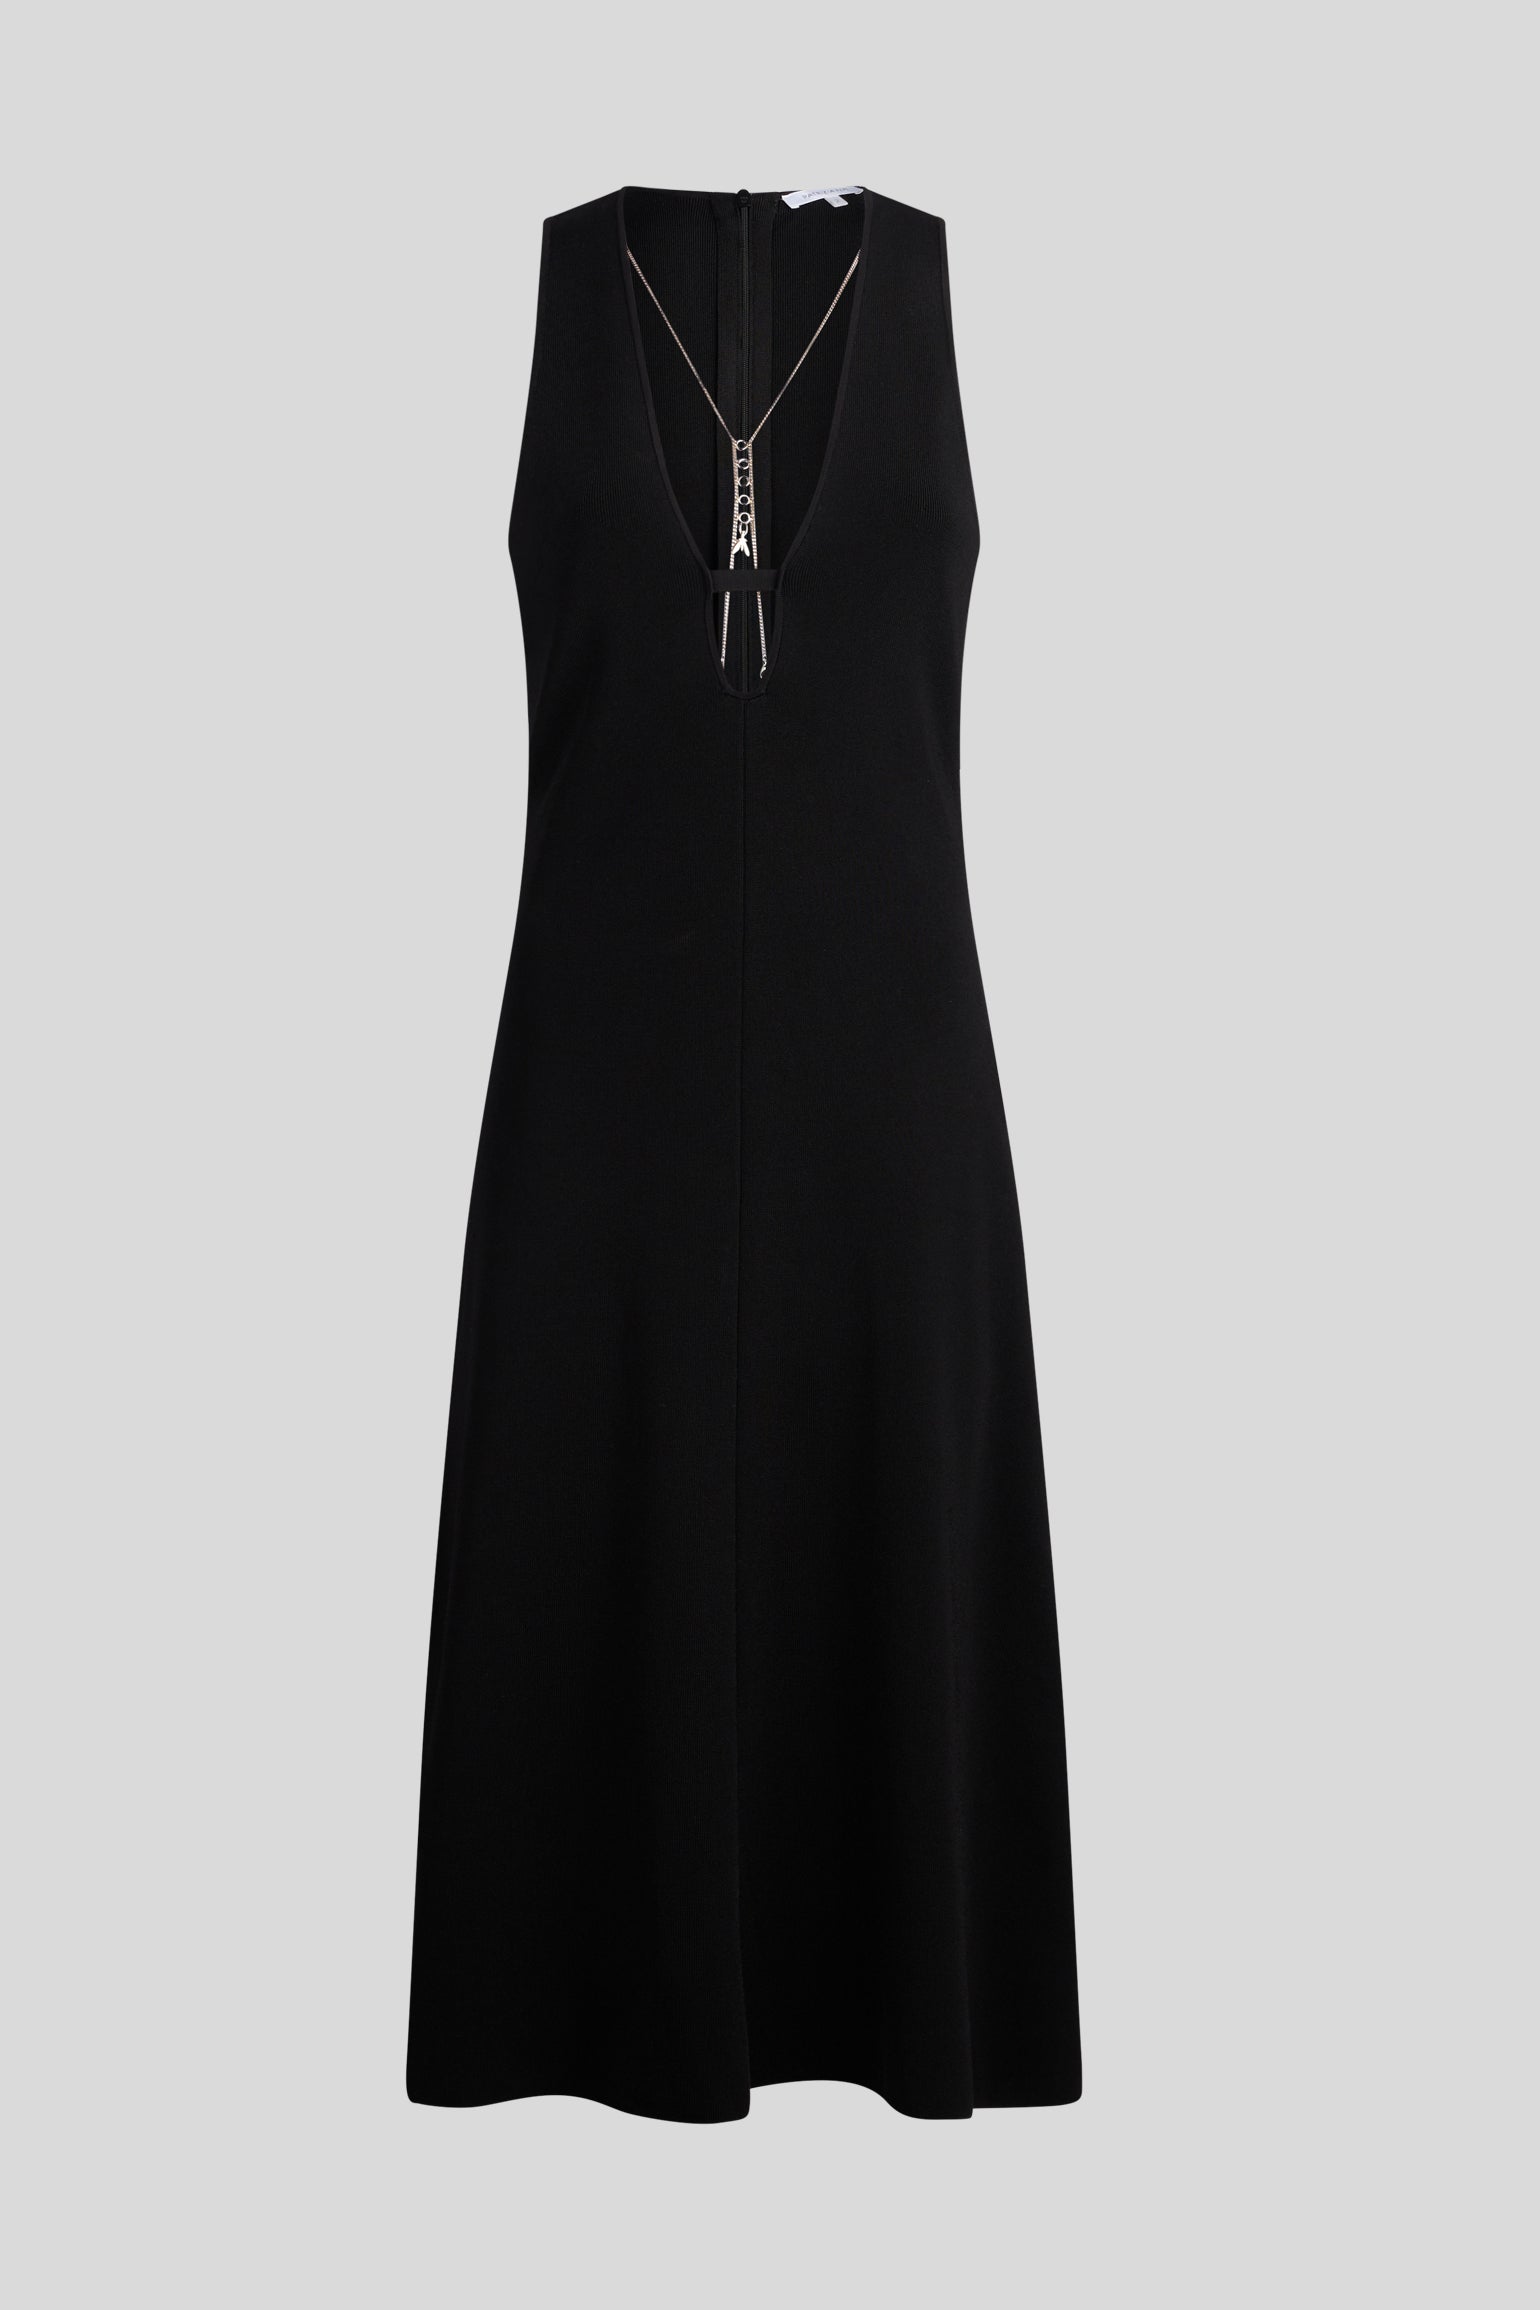 PATRIZIA PEPE Black Dress with Deep Neckline